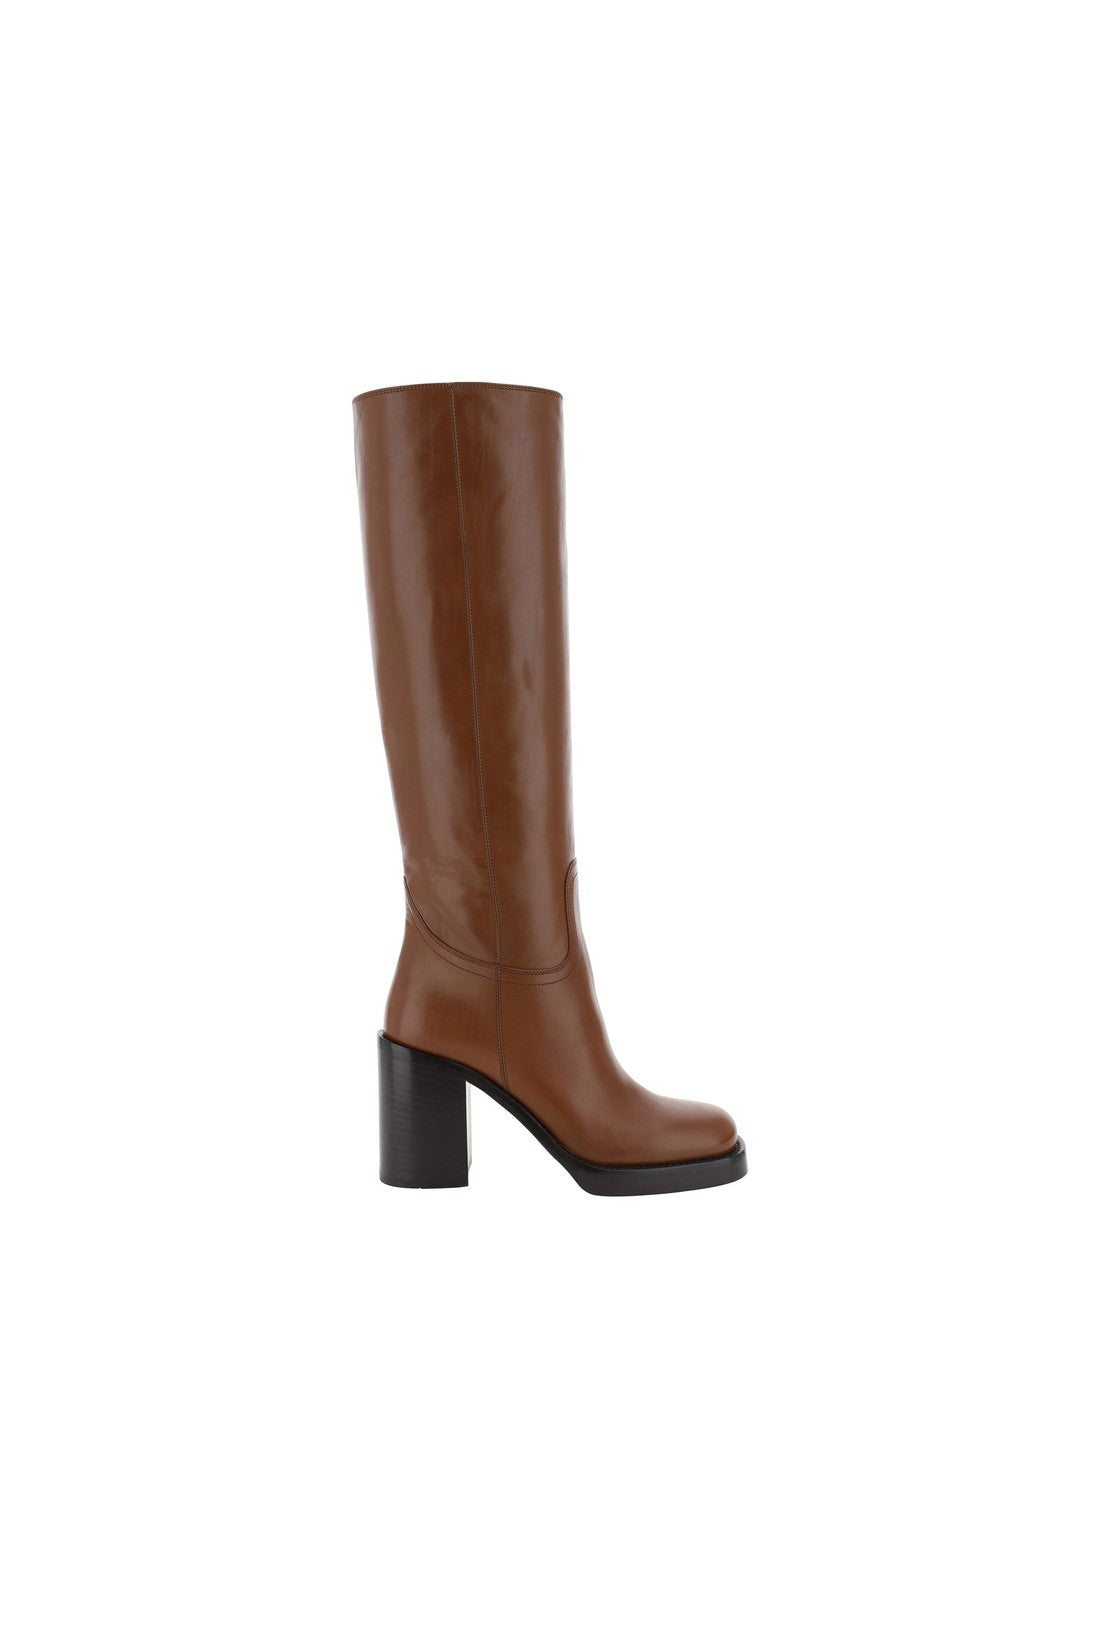 PRADA-Outlet-Sale-Prada Leather Boots-WOMEN SHOES-39-ARCHIVIST